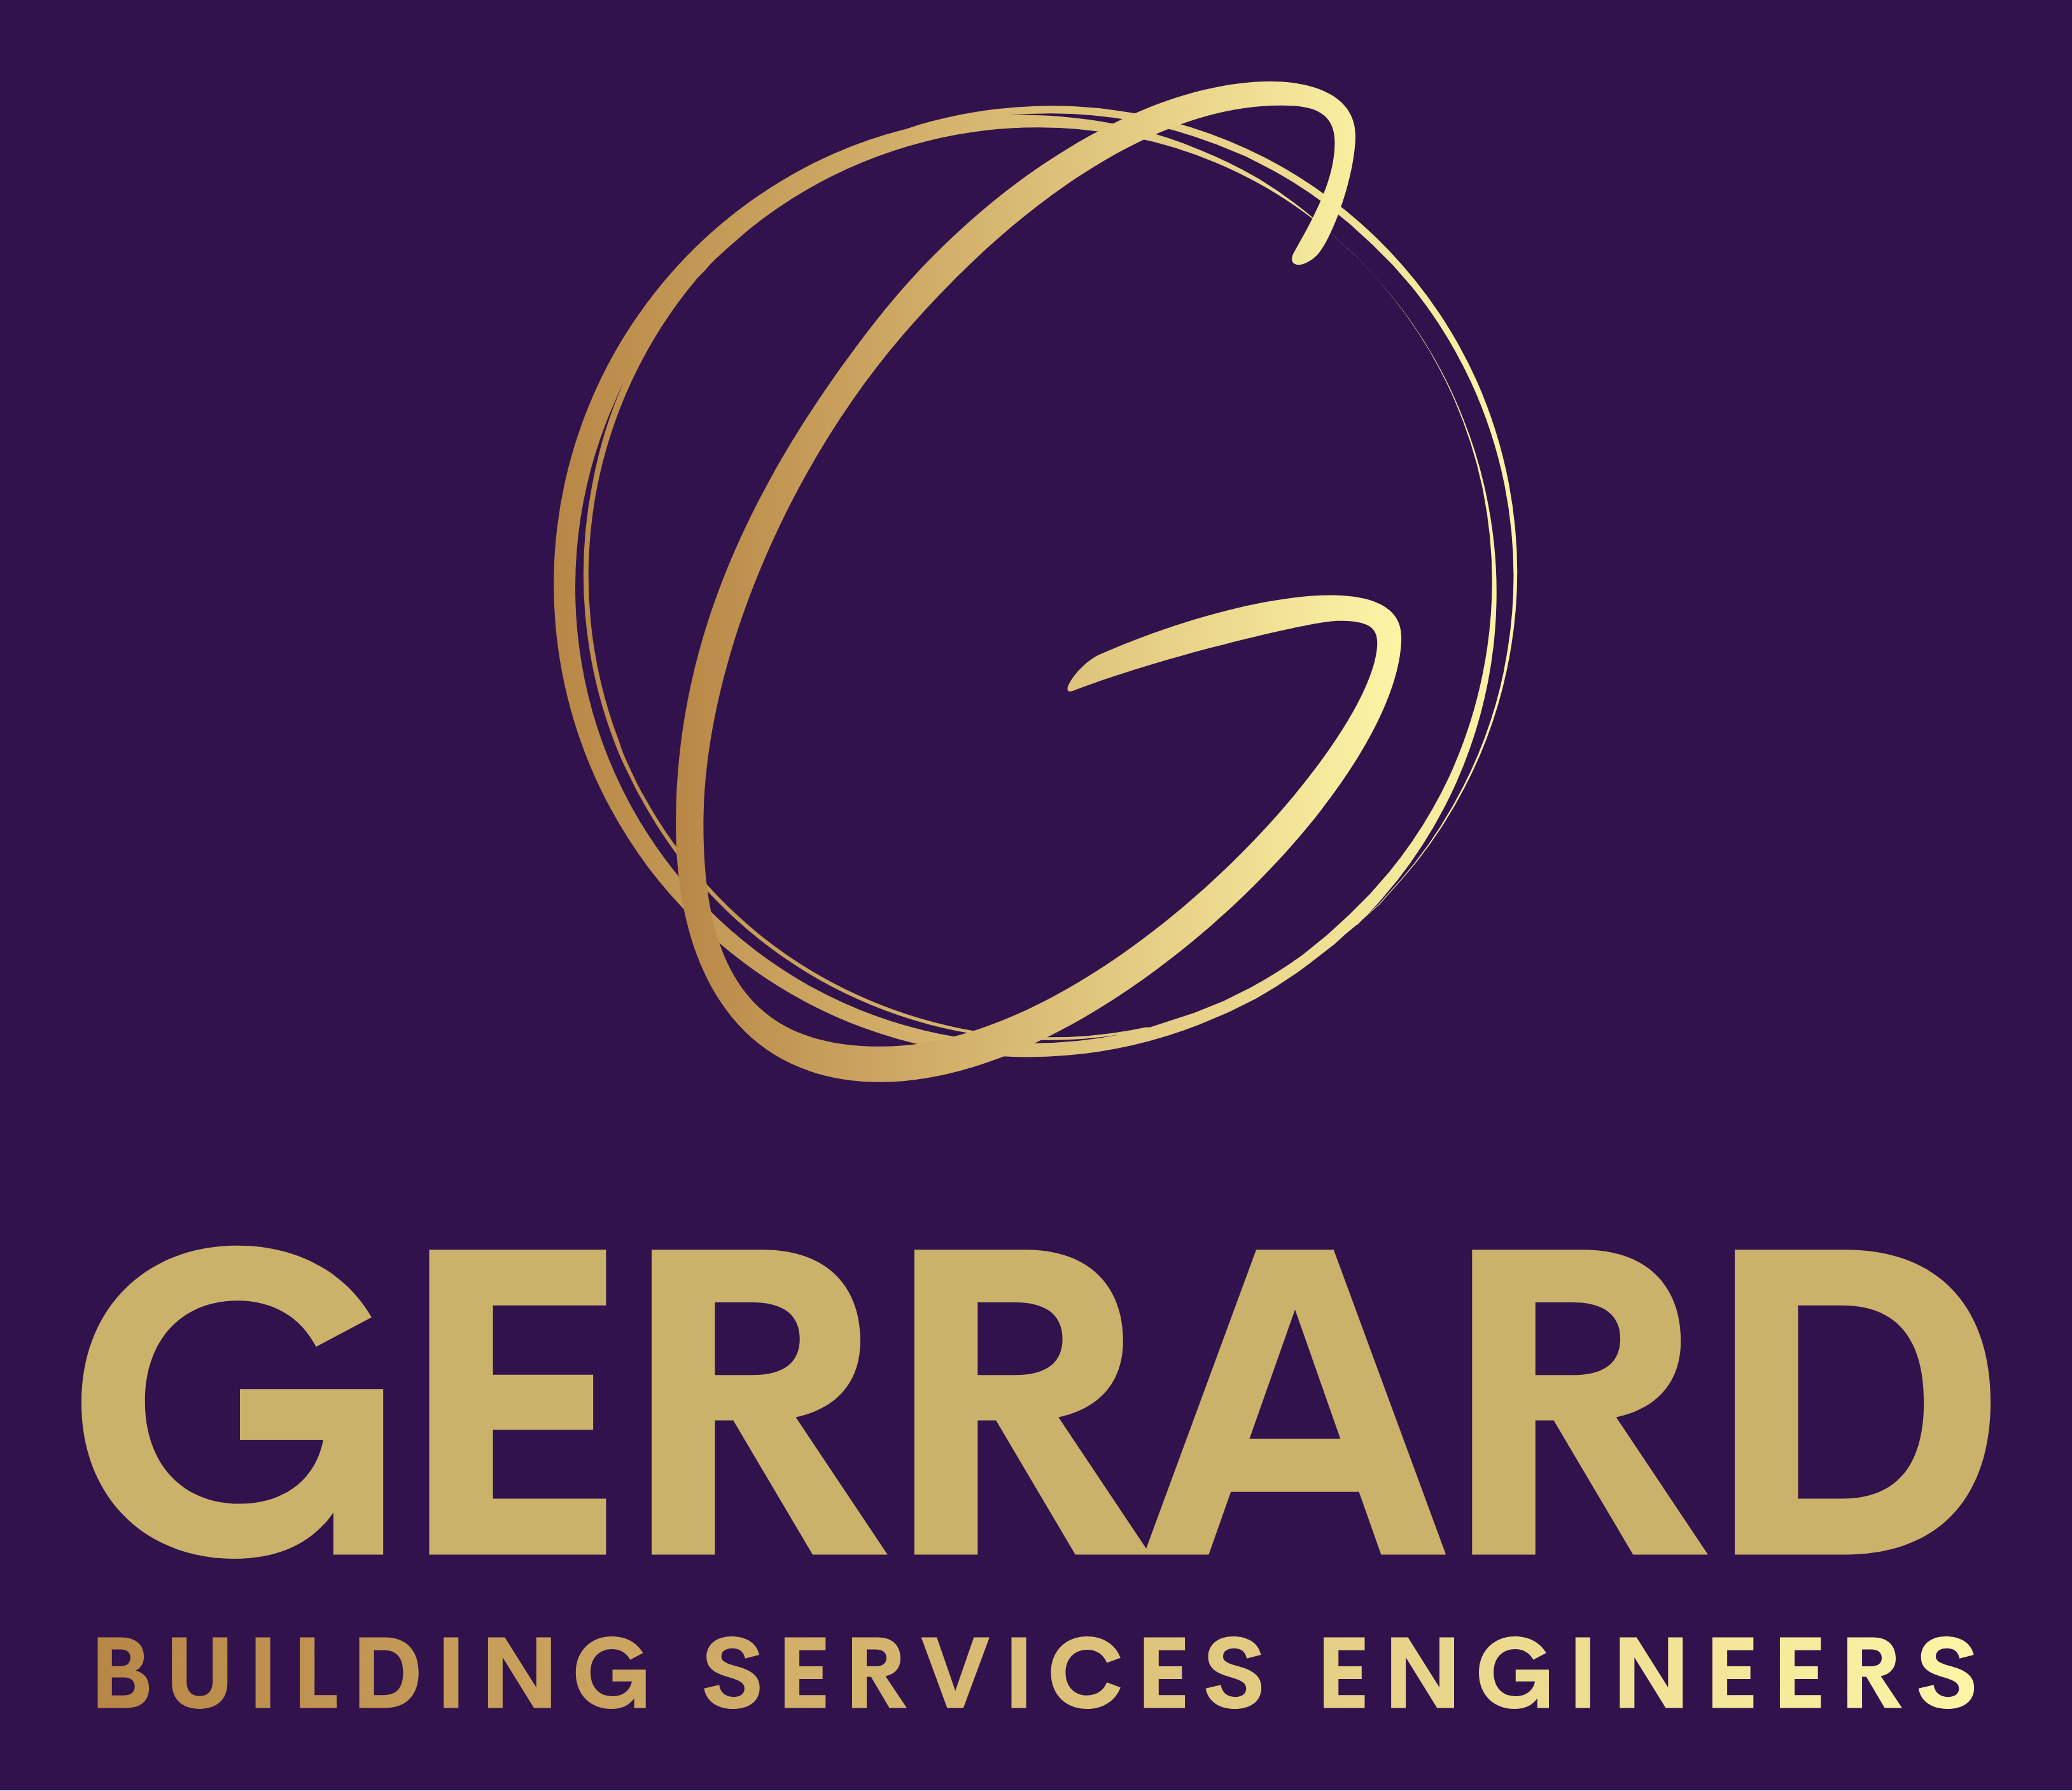 Gerrard Building Services Engineers